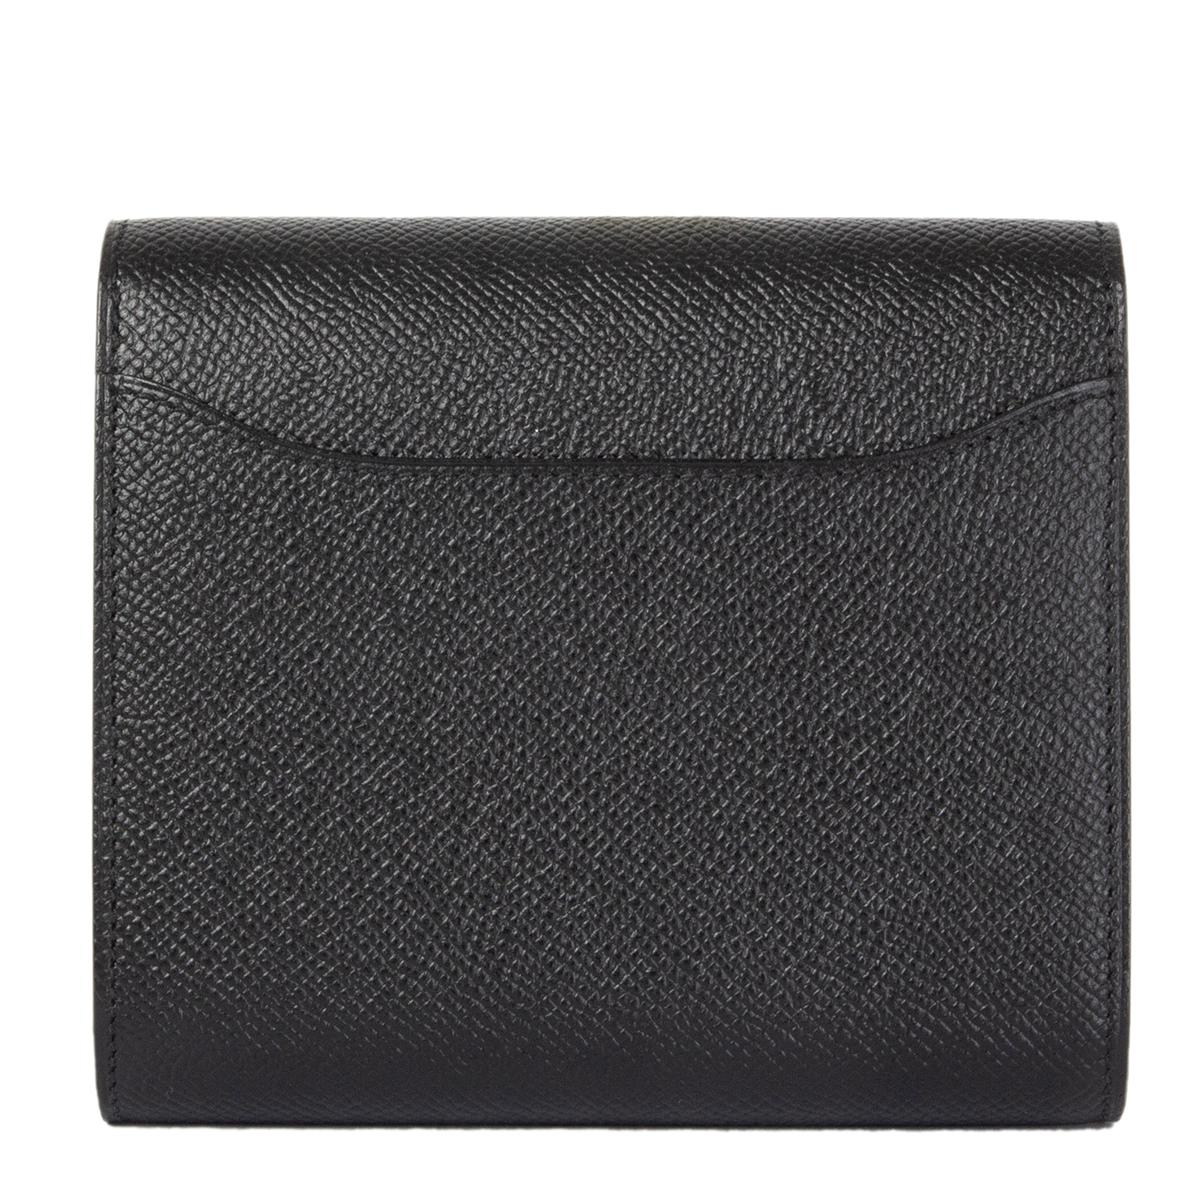 Black HERMES black Epsom leather CONSTANCE COMPACT Wallet